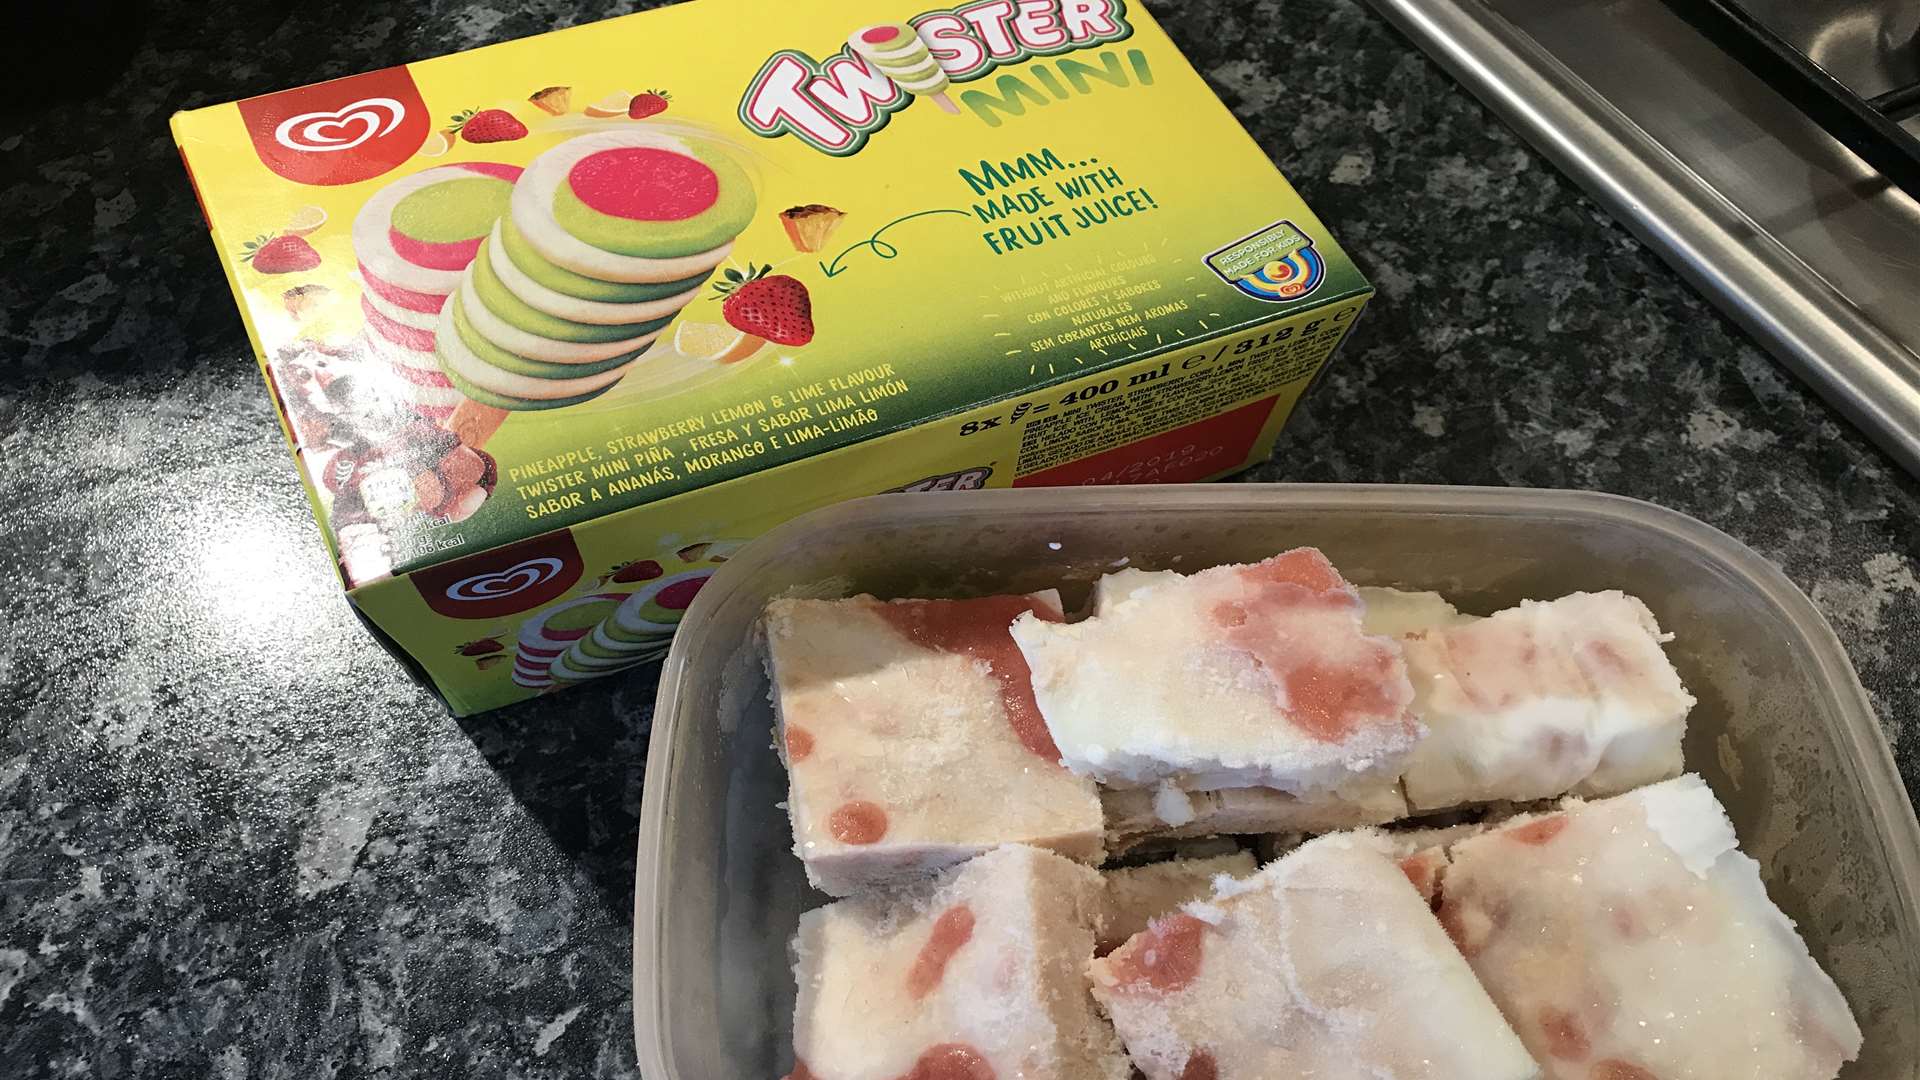 Getting me through the week - Twisters and frozen yogurt bark